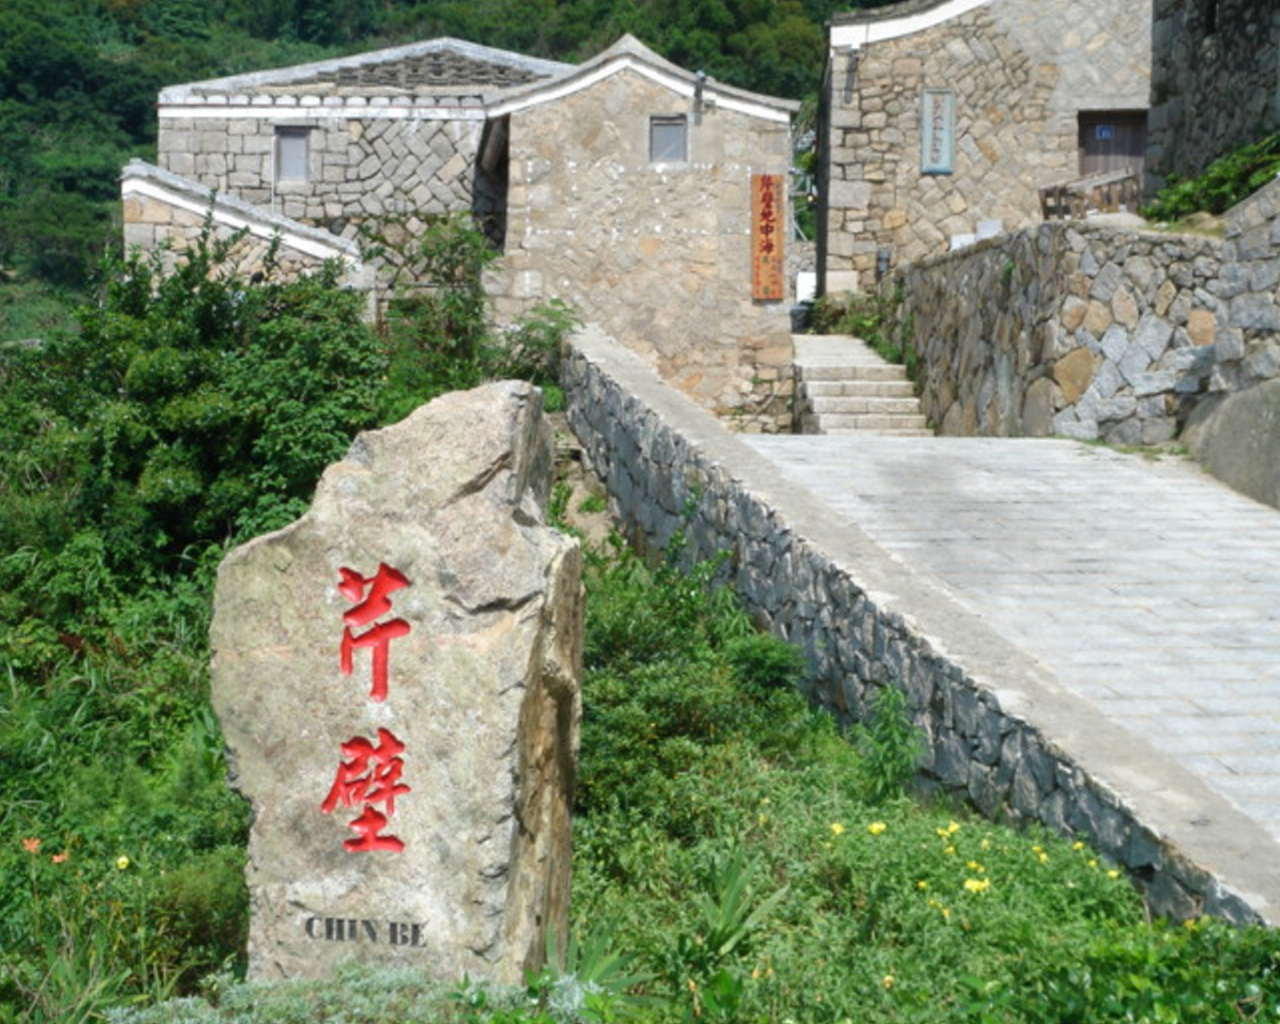 Chin-Be Village